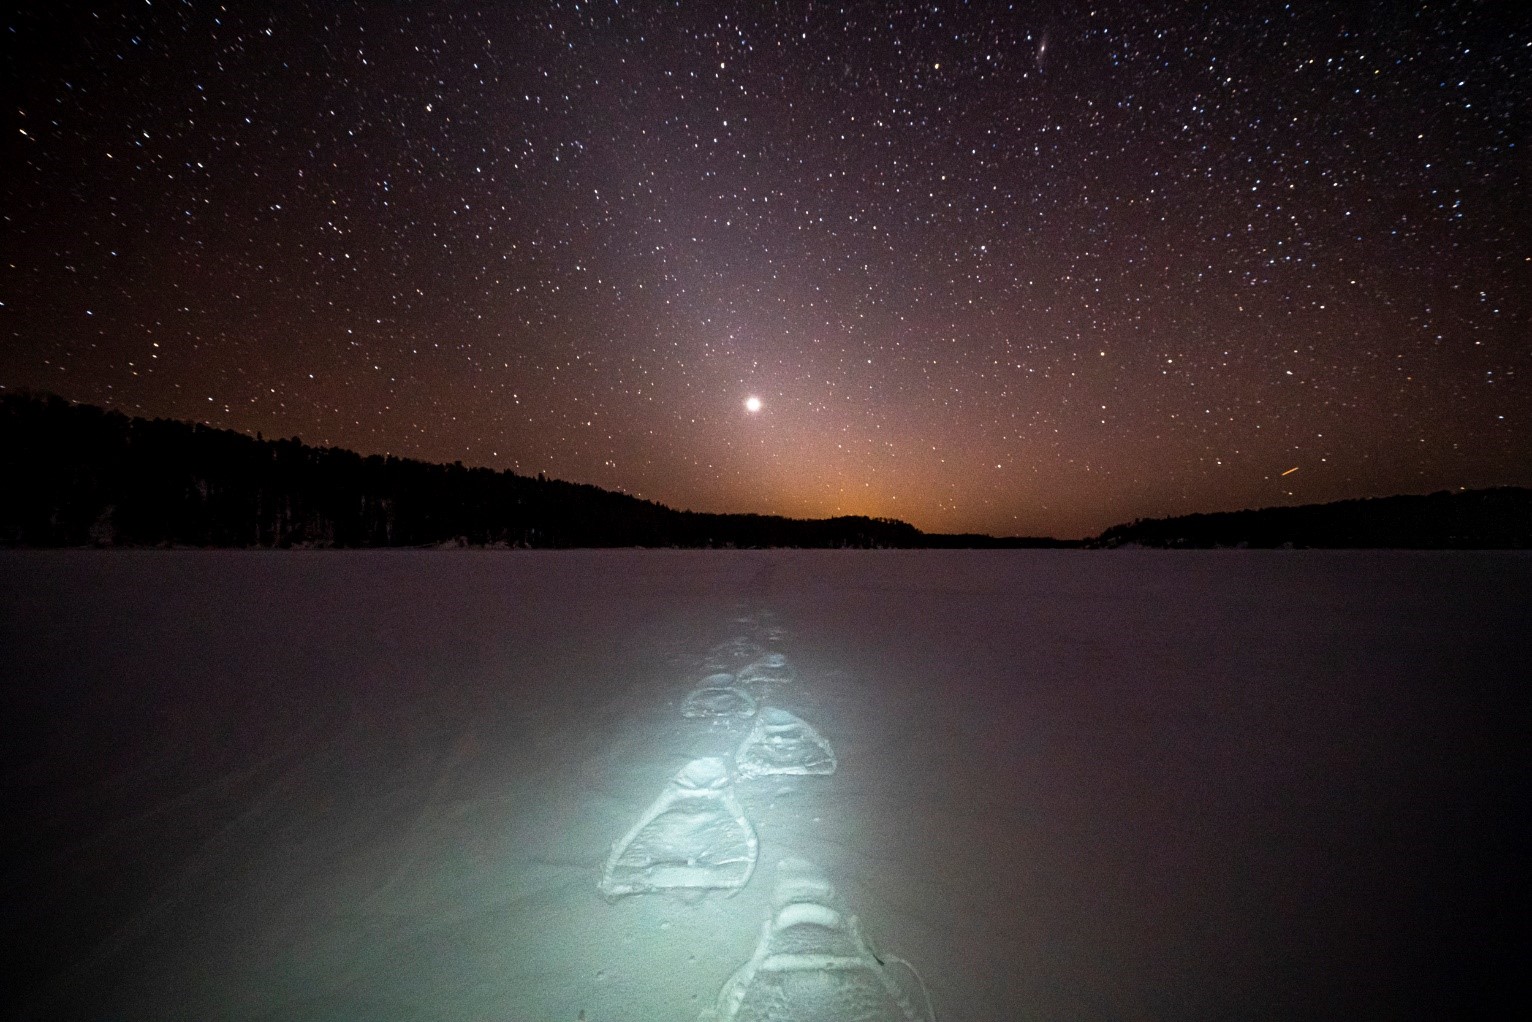 Snowshoe prints under a starry night sky.